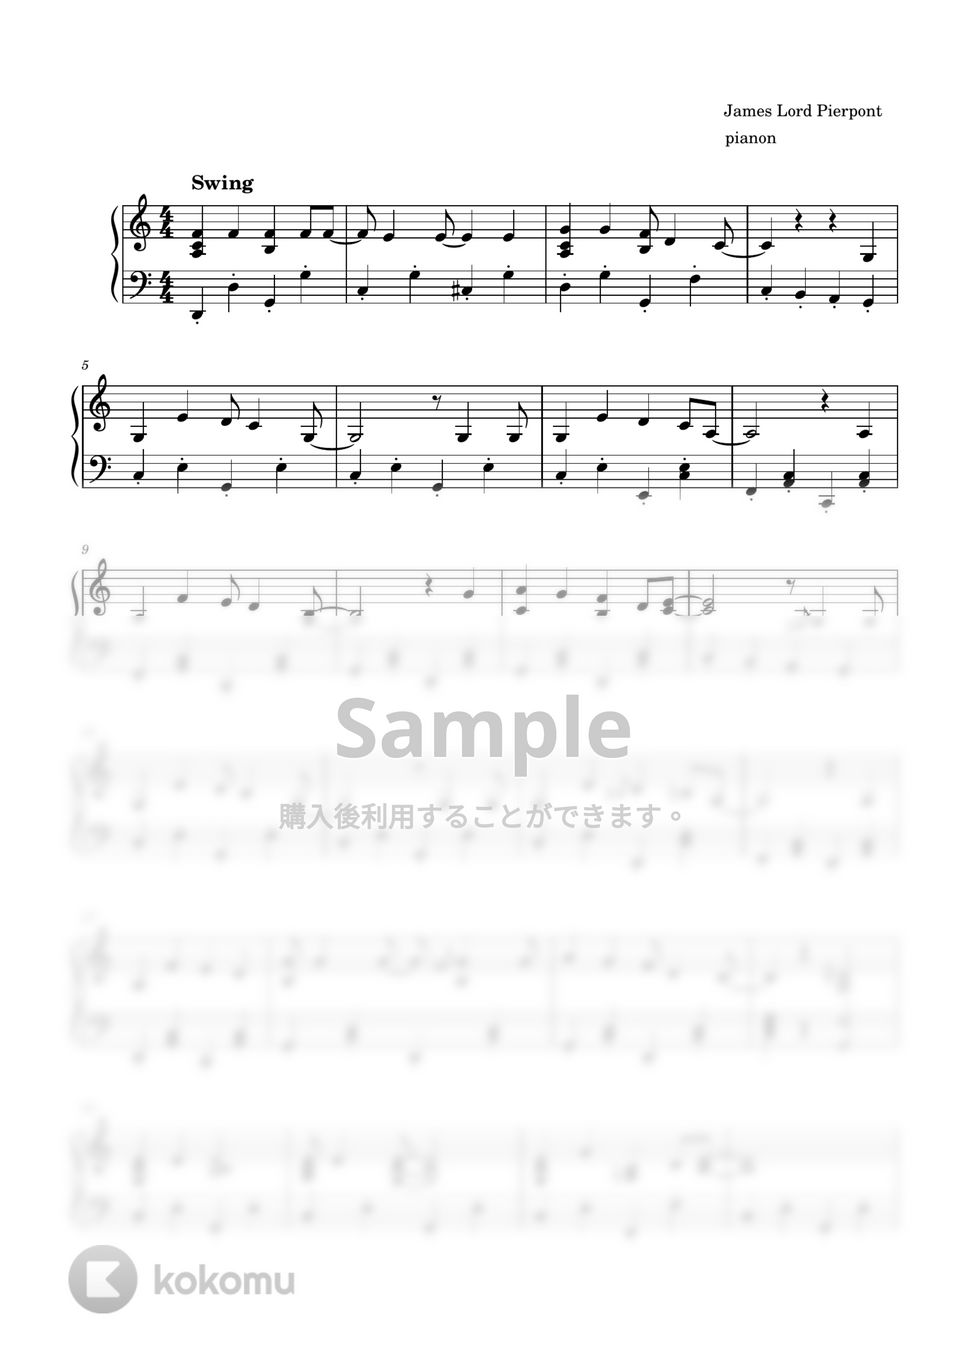 James Lord Pierpont - ジングルベル (ピアノソロ中級) by pianon